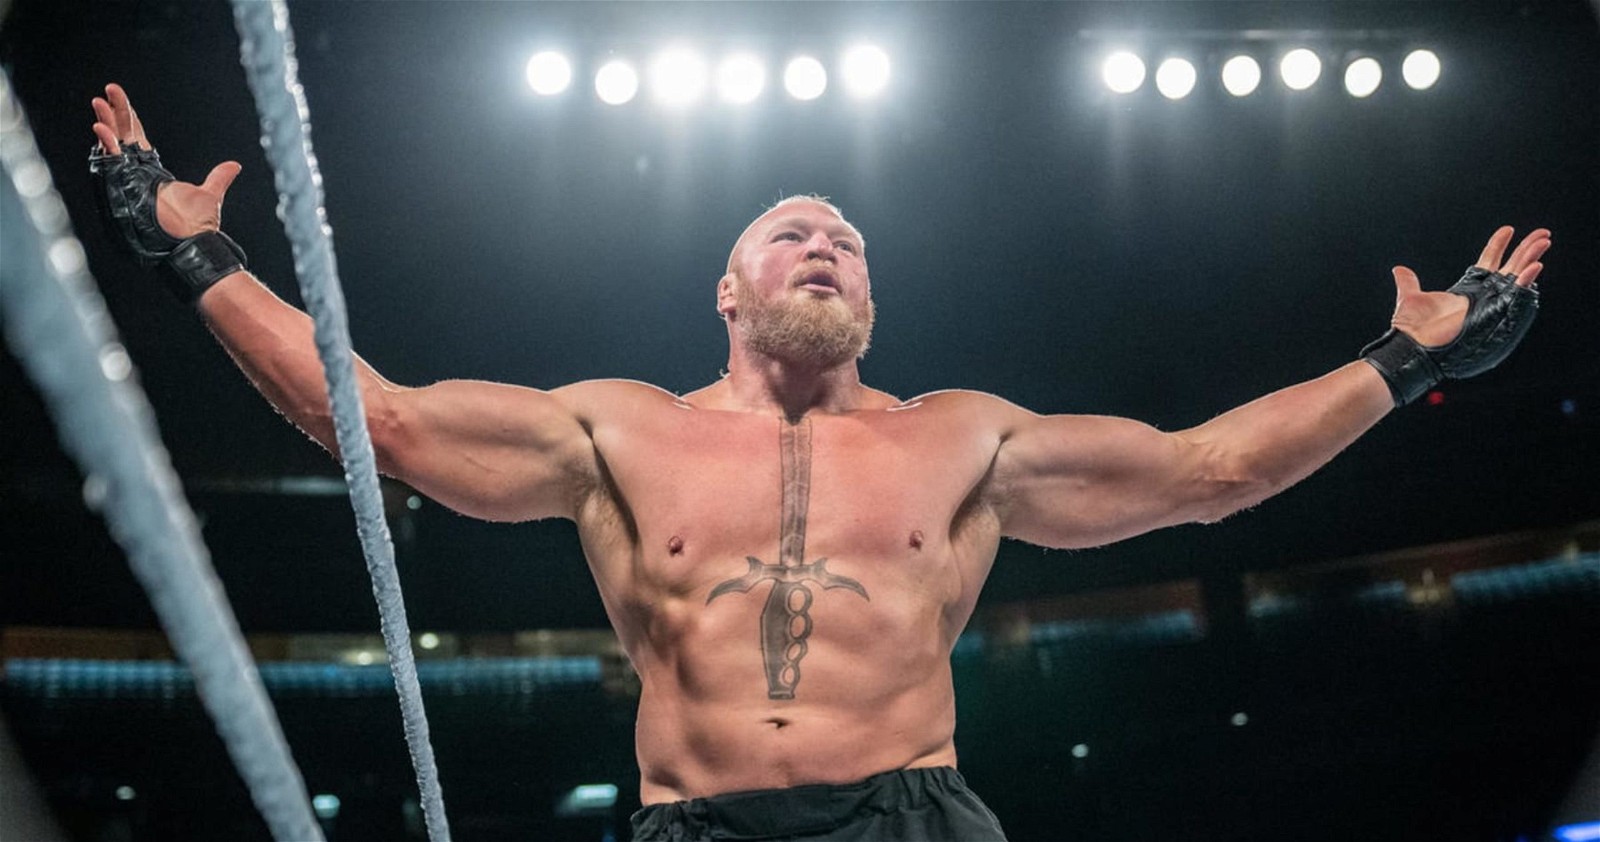 Brock Lesnar's physique